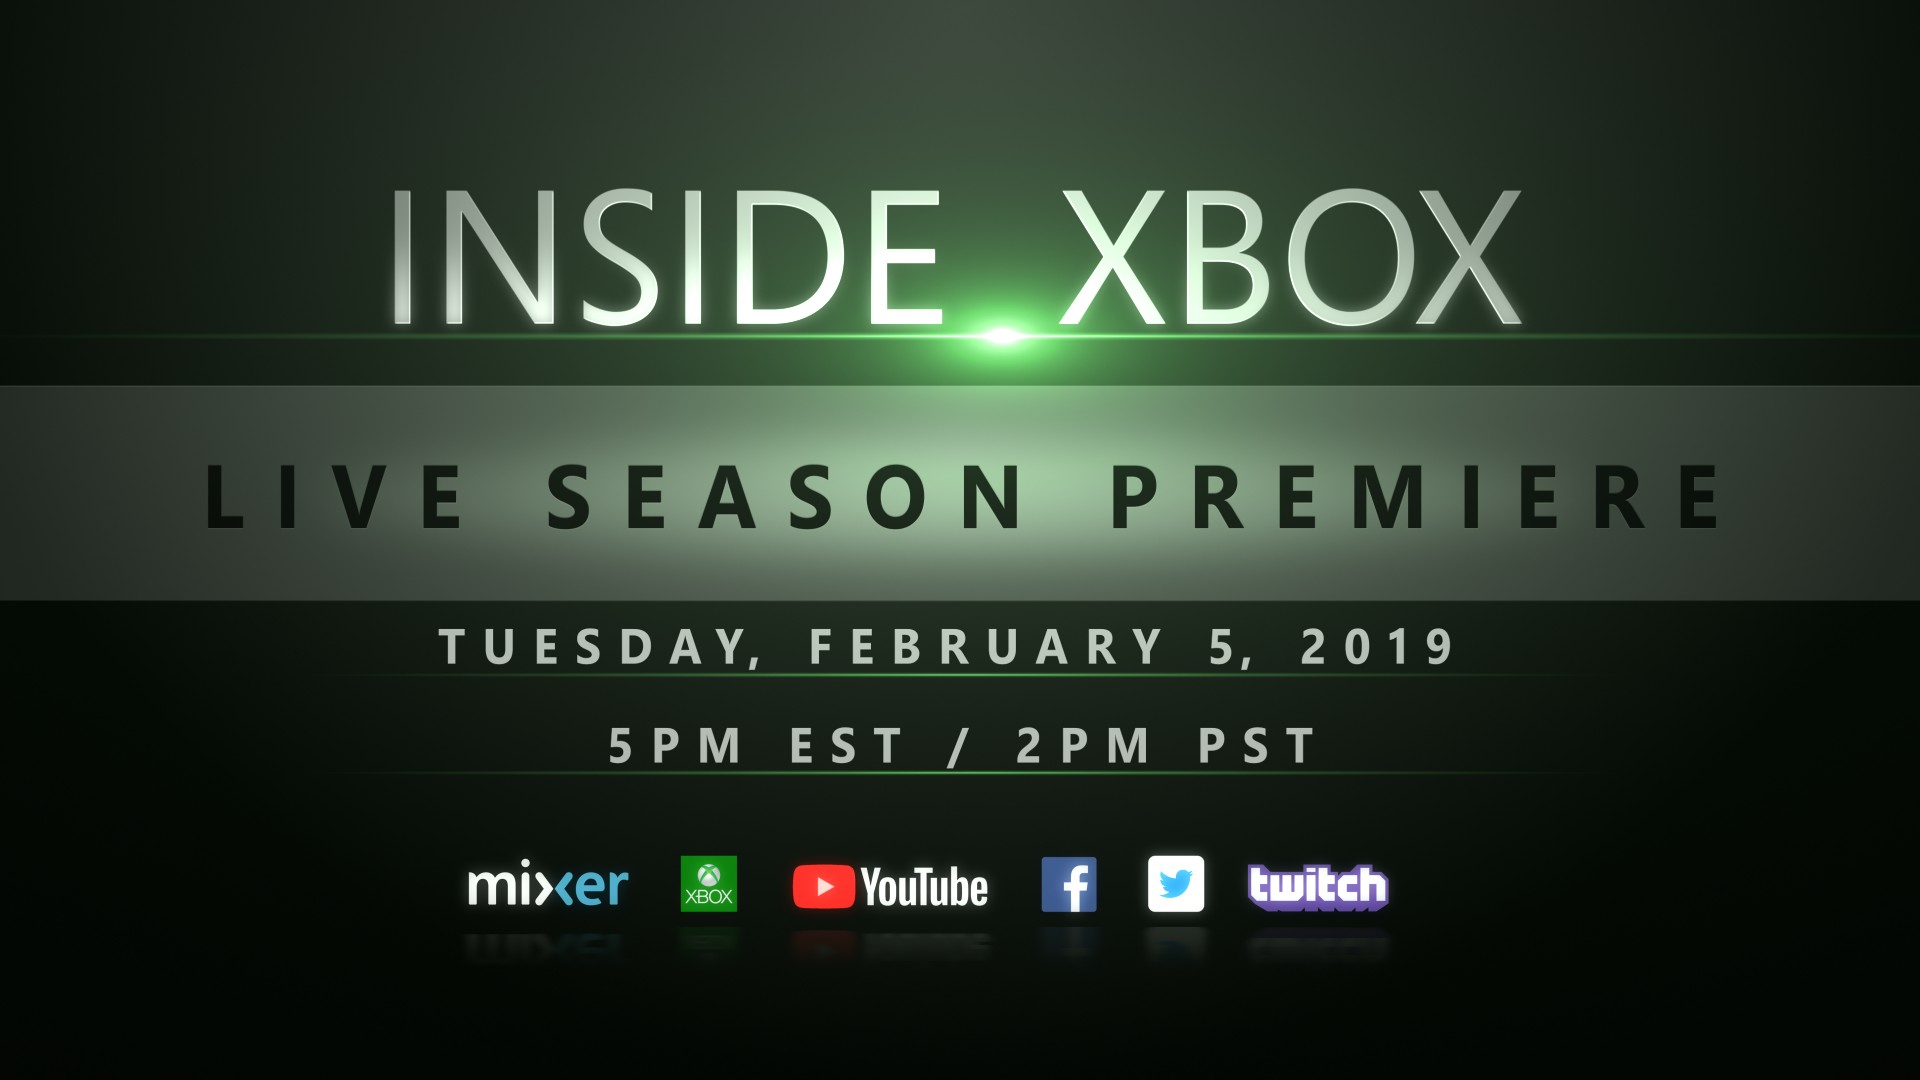 This Week on Xbox: June 28, 2019 on Xbox One 2019_Feb05_Inside_Xbox_Promo1_Thumbnail_16x9_V2.jpg